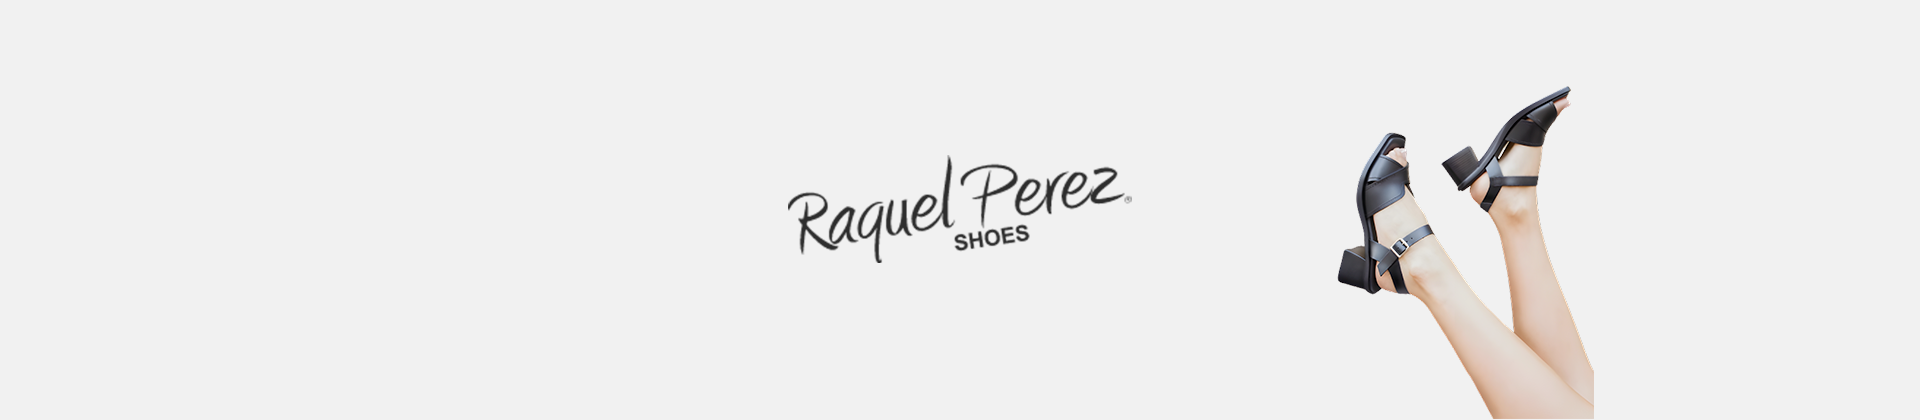 Raquel Perez scarpe Firmate Online